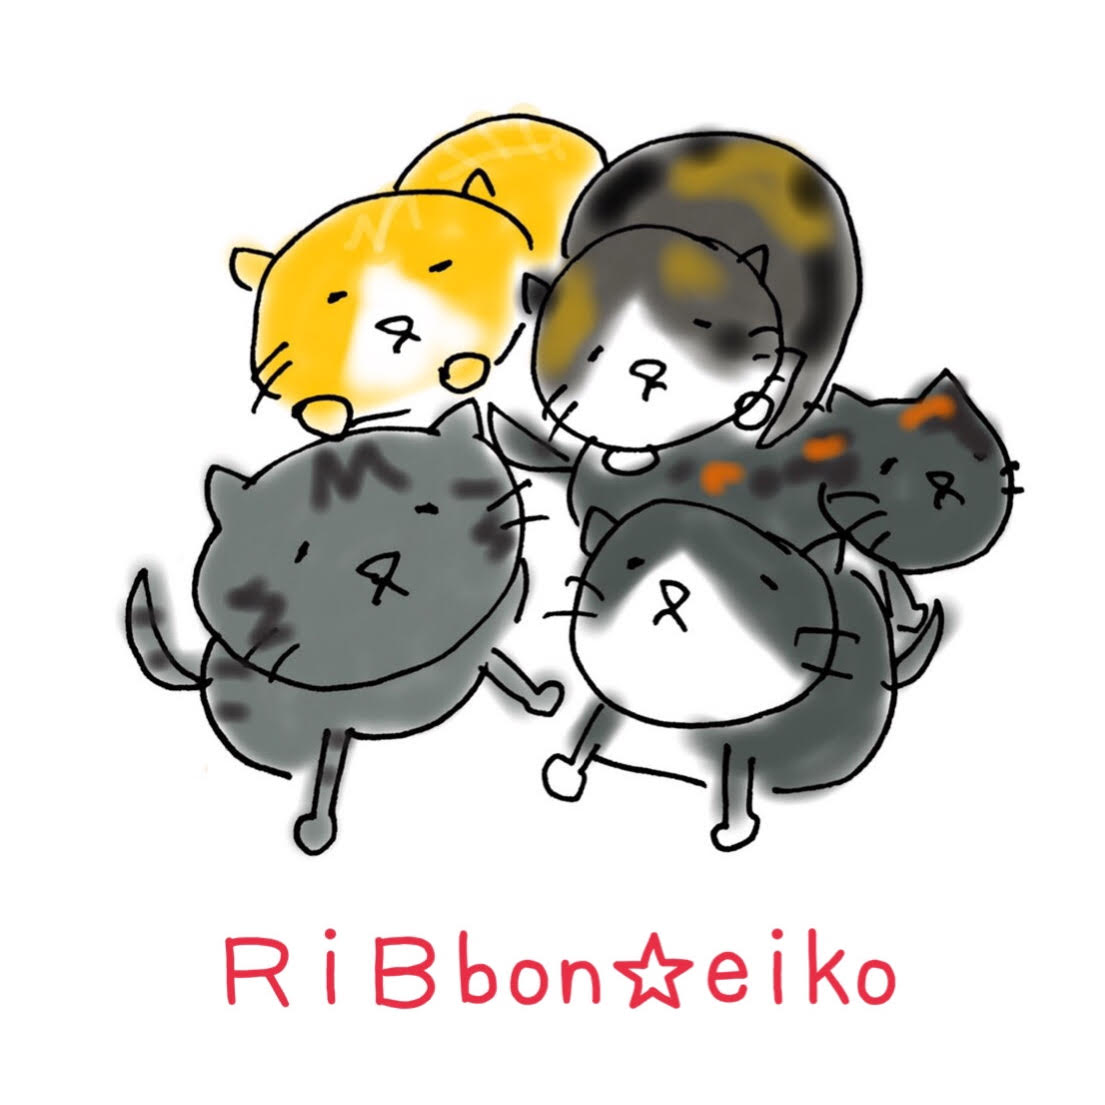 ri b bon☆eiko's gallery